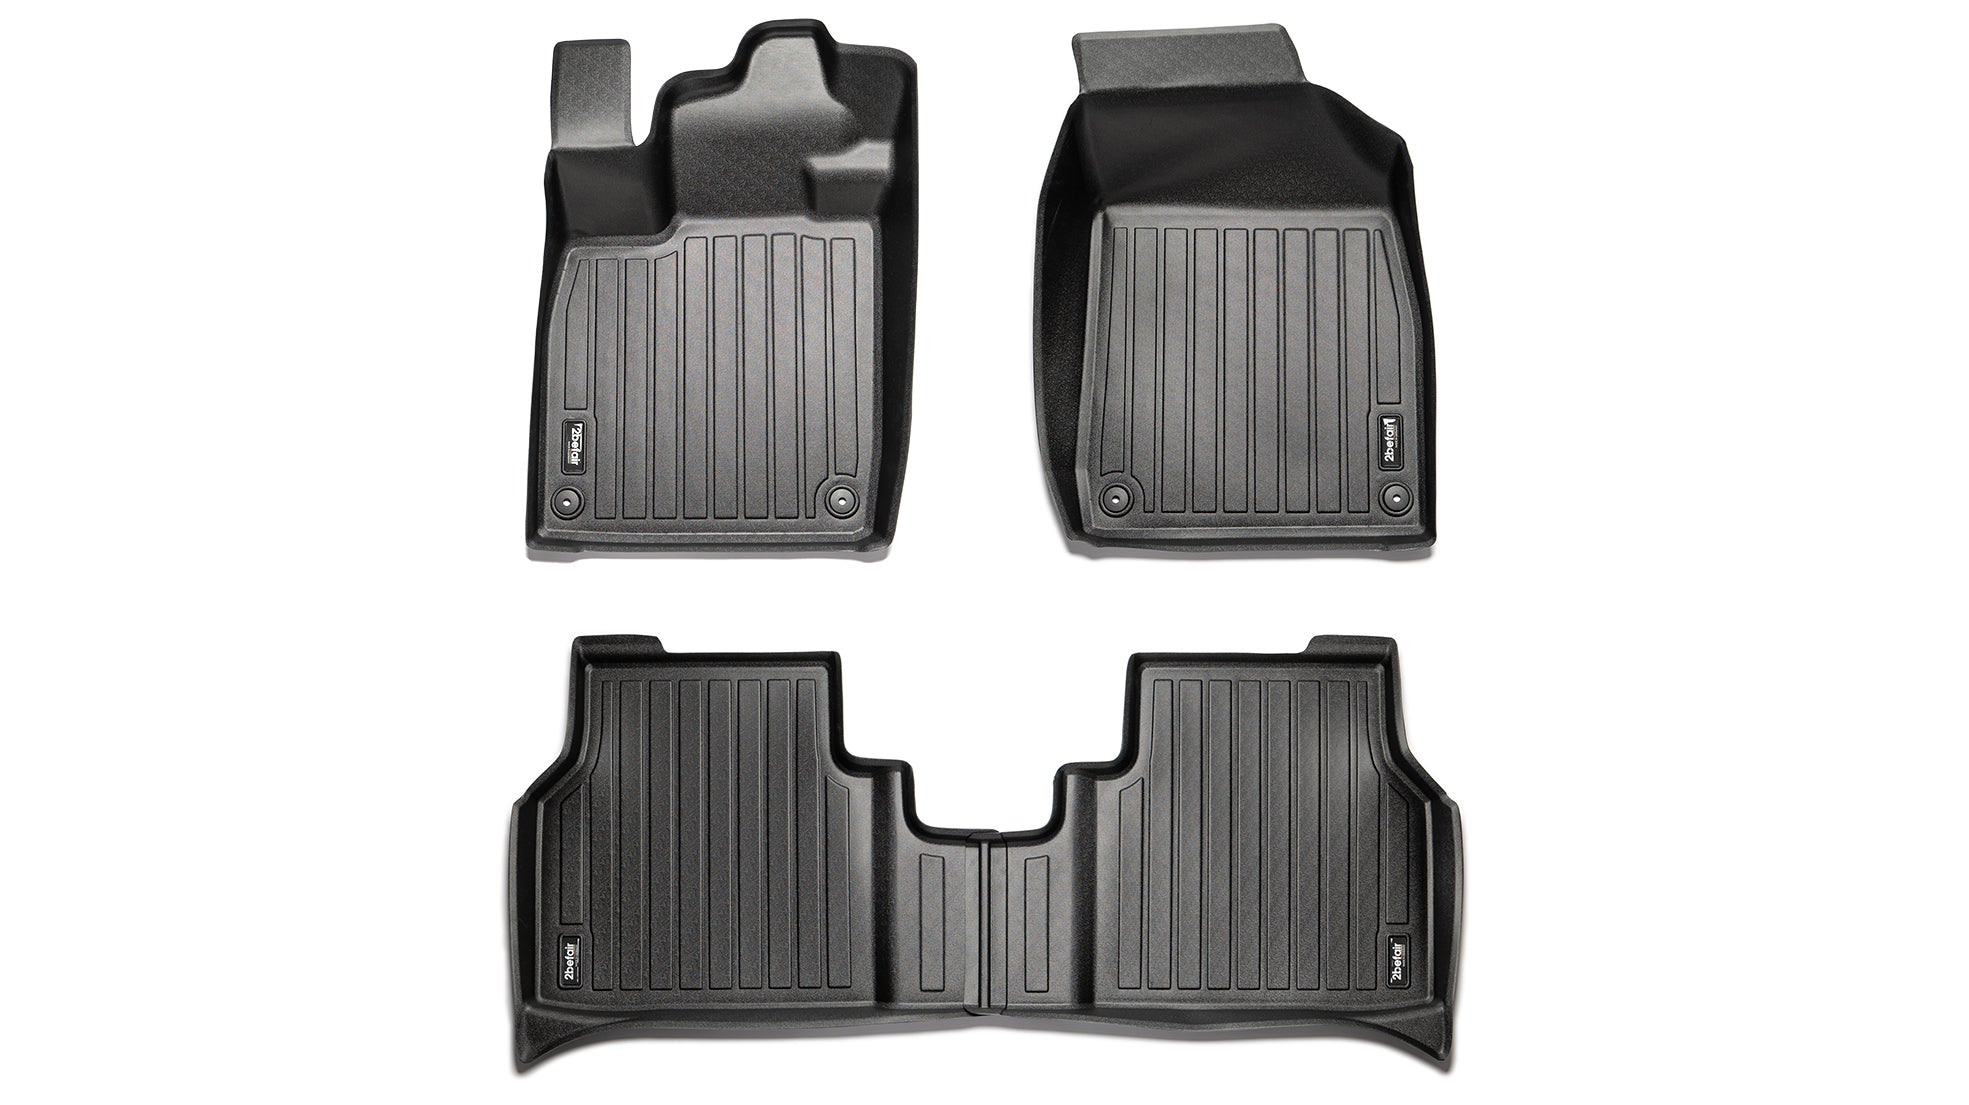 2befair interior rubber mat set for the Audi Q4 e-tron